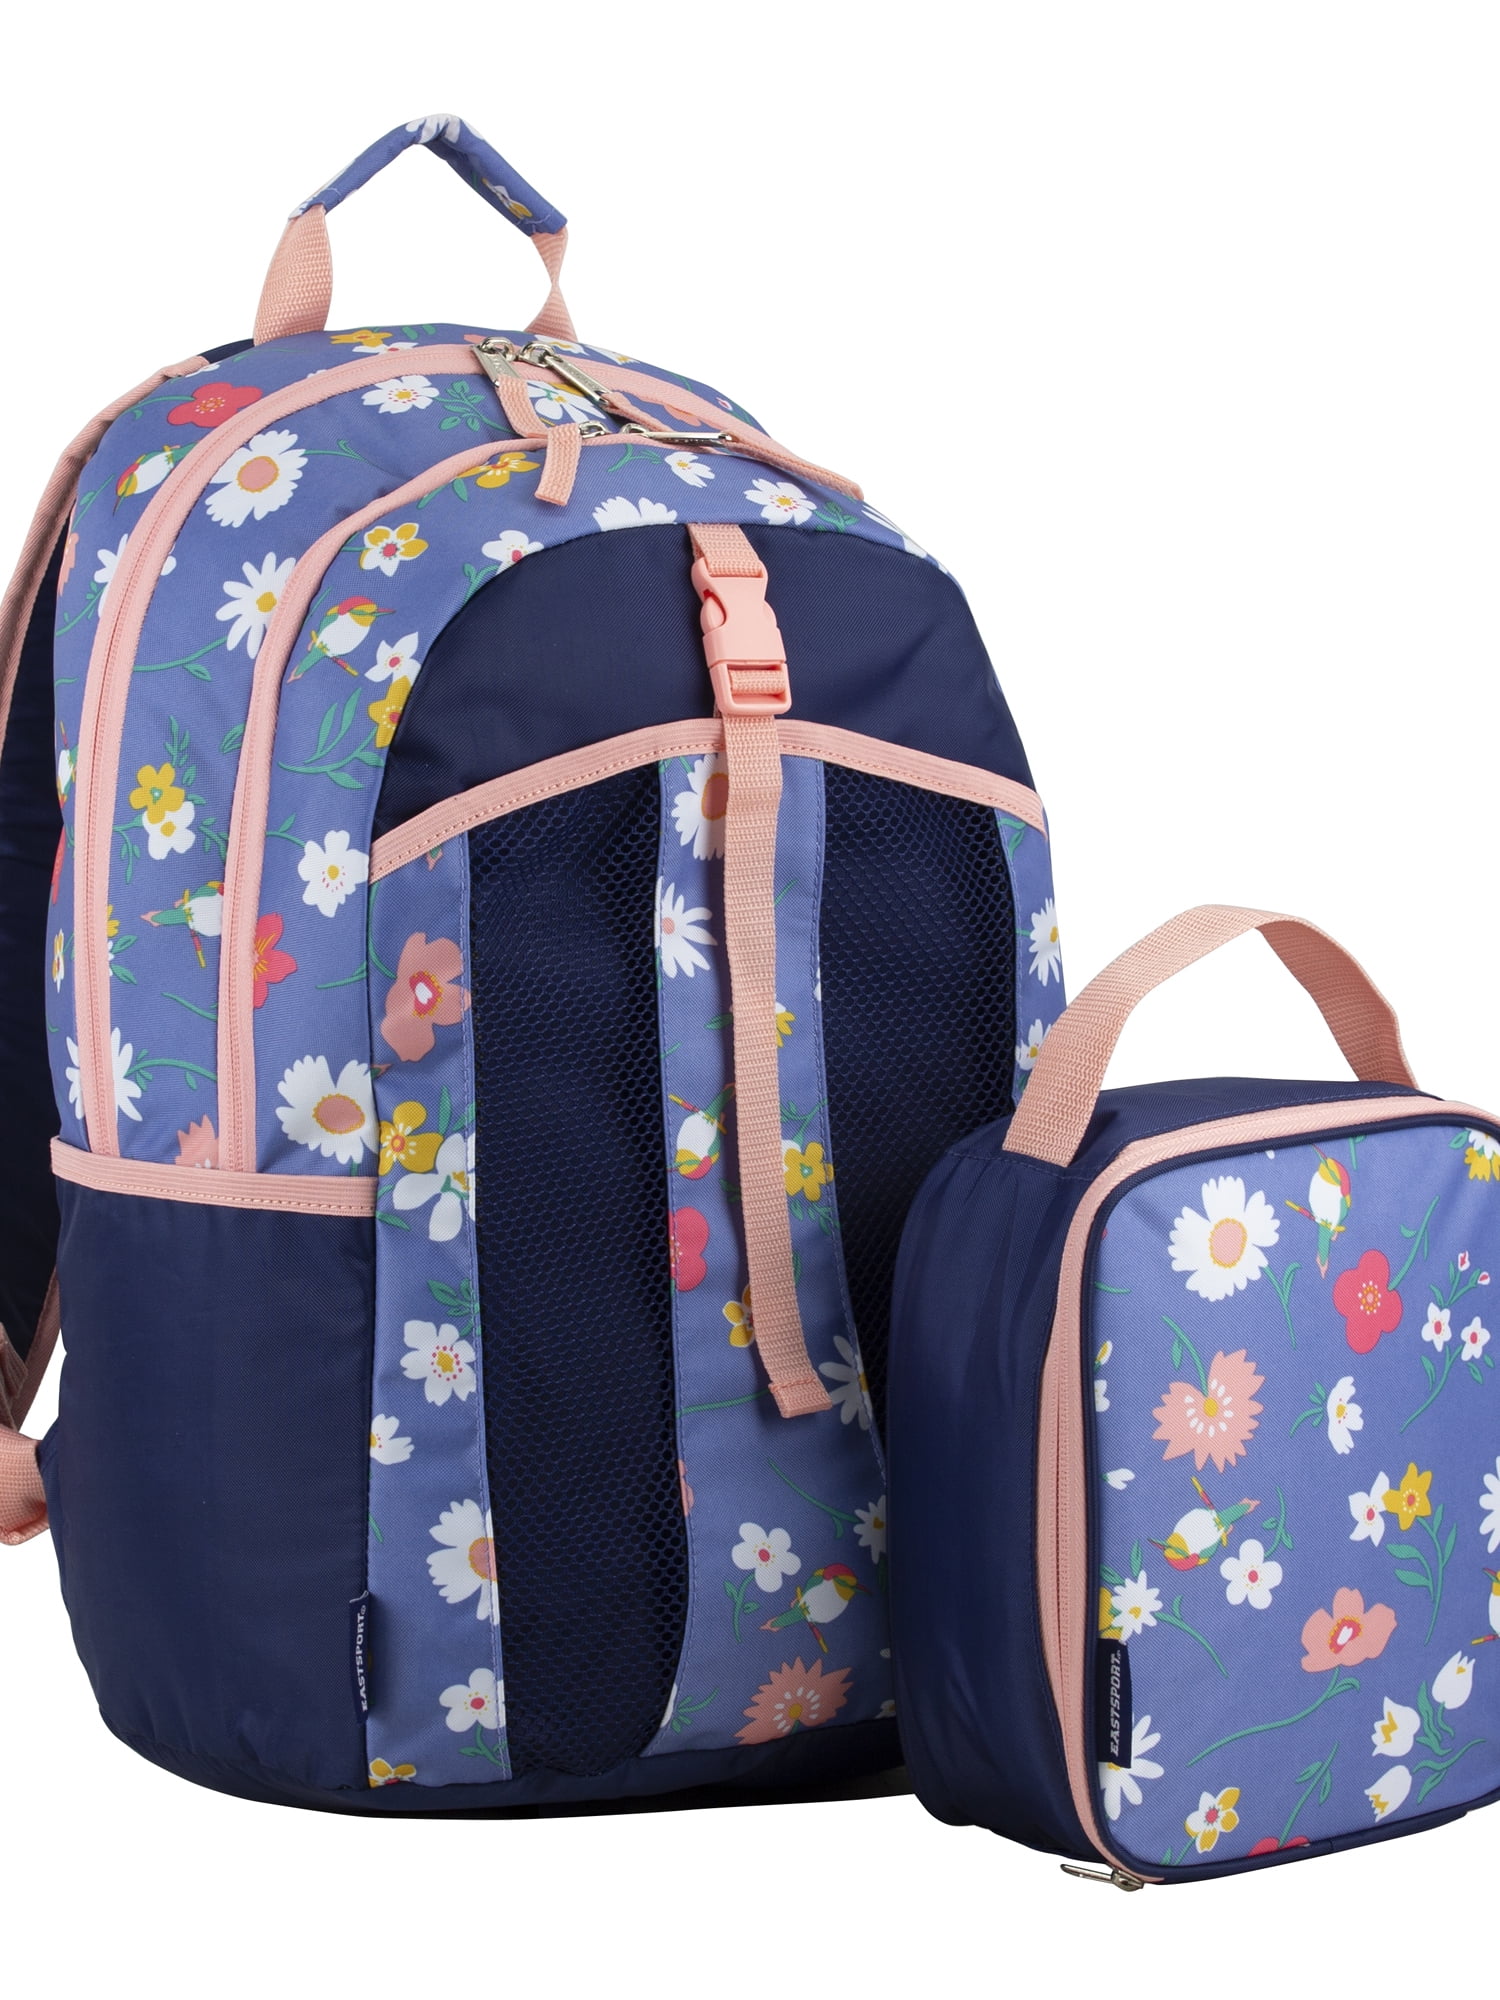 Backpack Purses that We're Loving — Sugar & Cloth